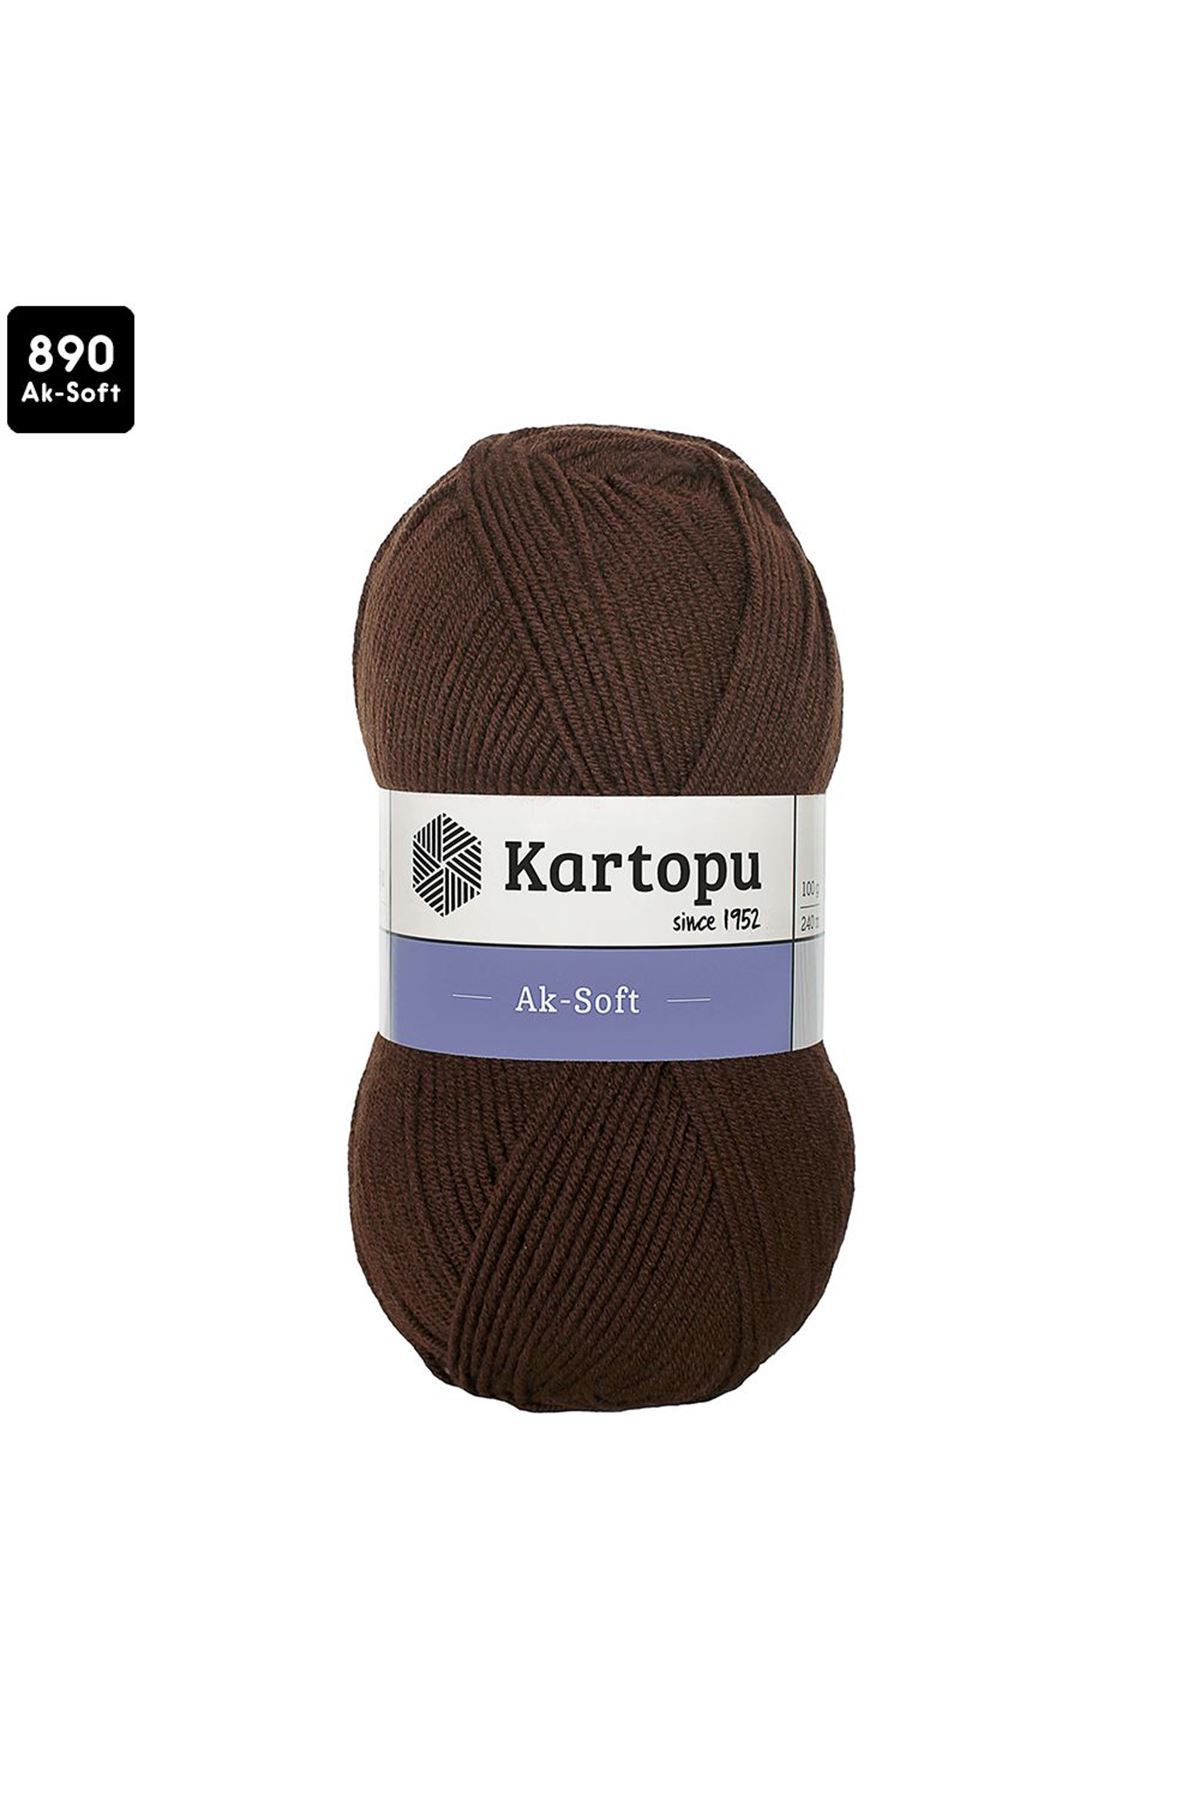 Kartopu Ak-Soft Renk No:890